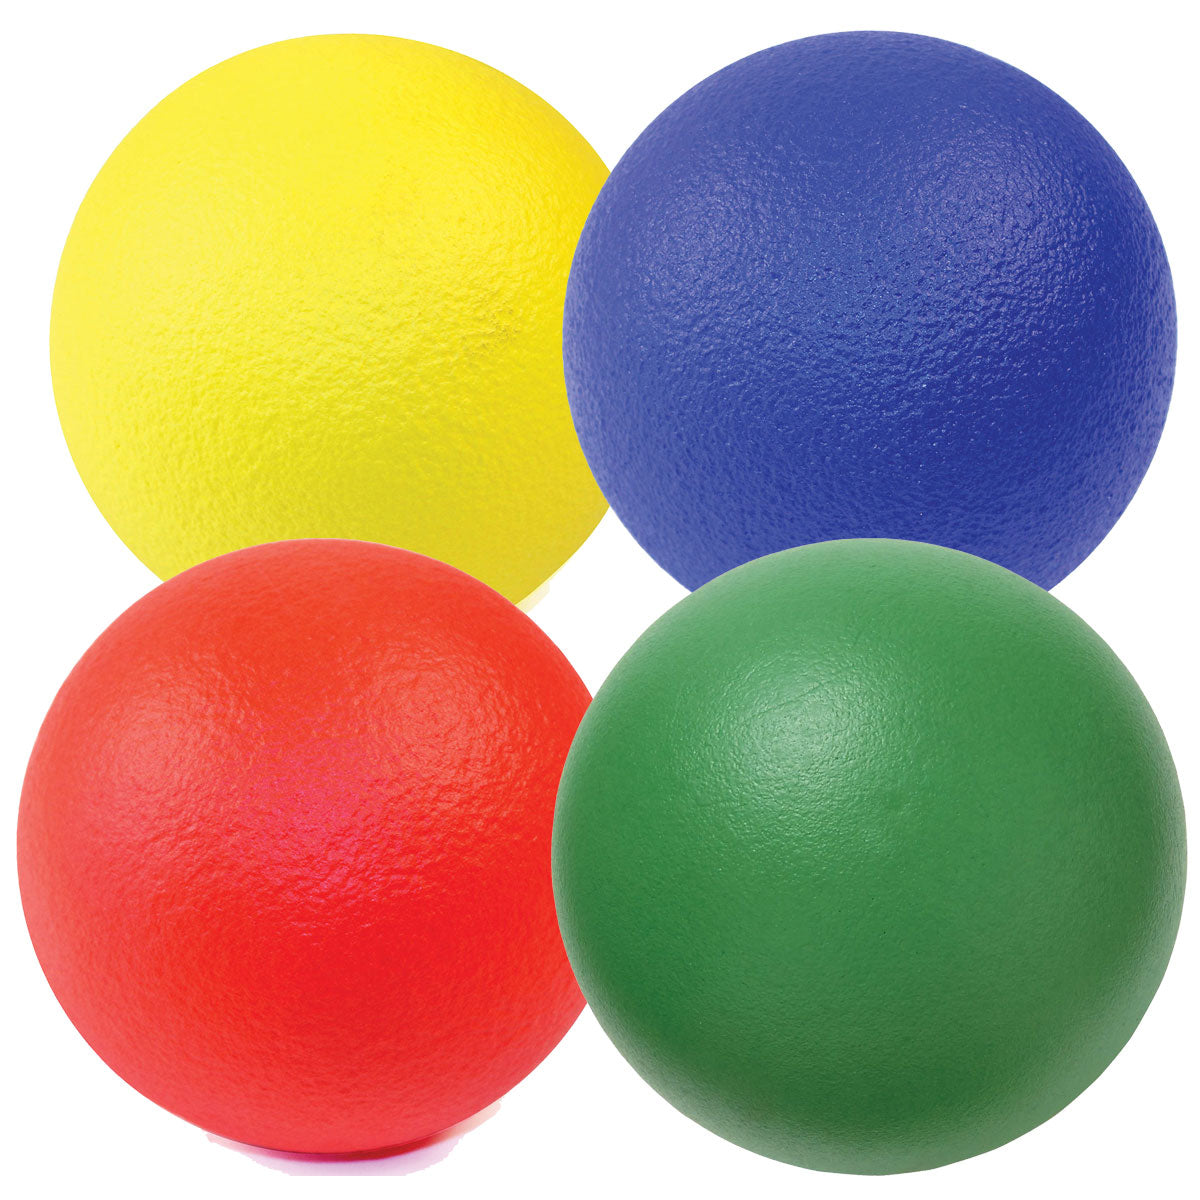 Active Play Coated 150mm Foam Ball (Single Ball)